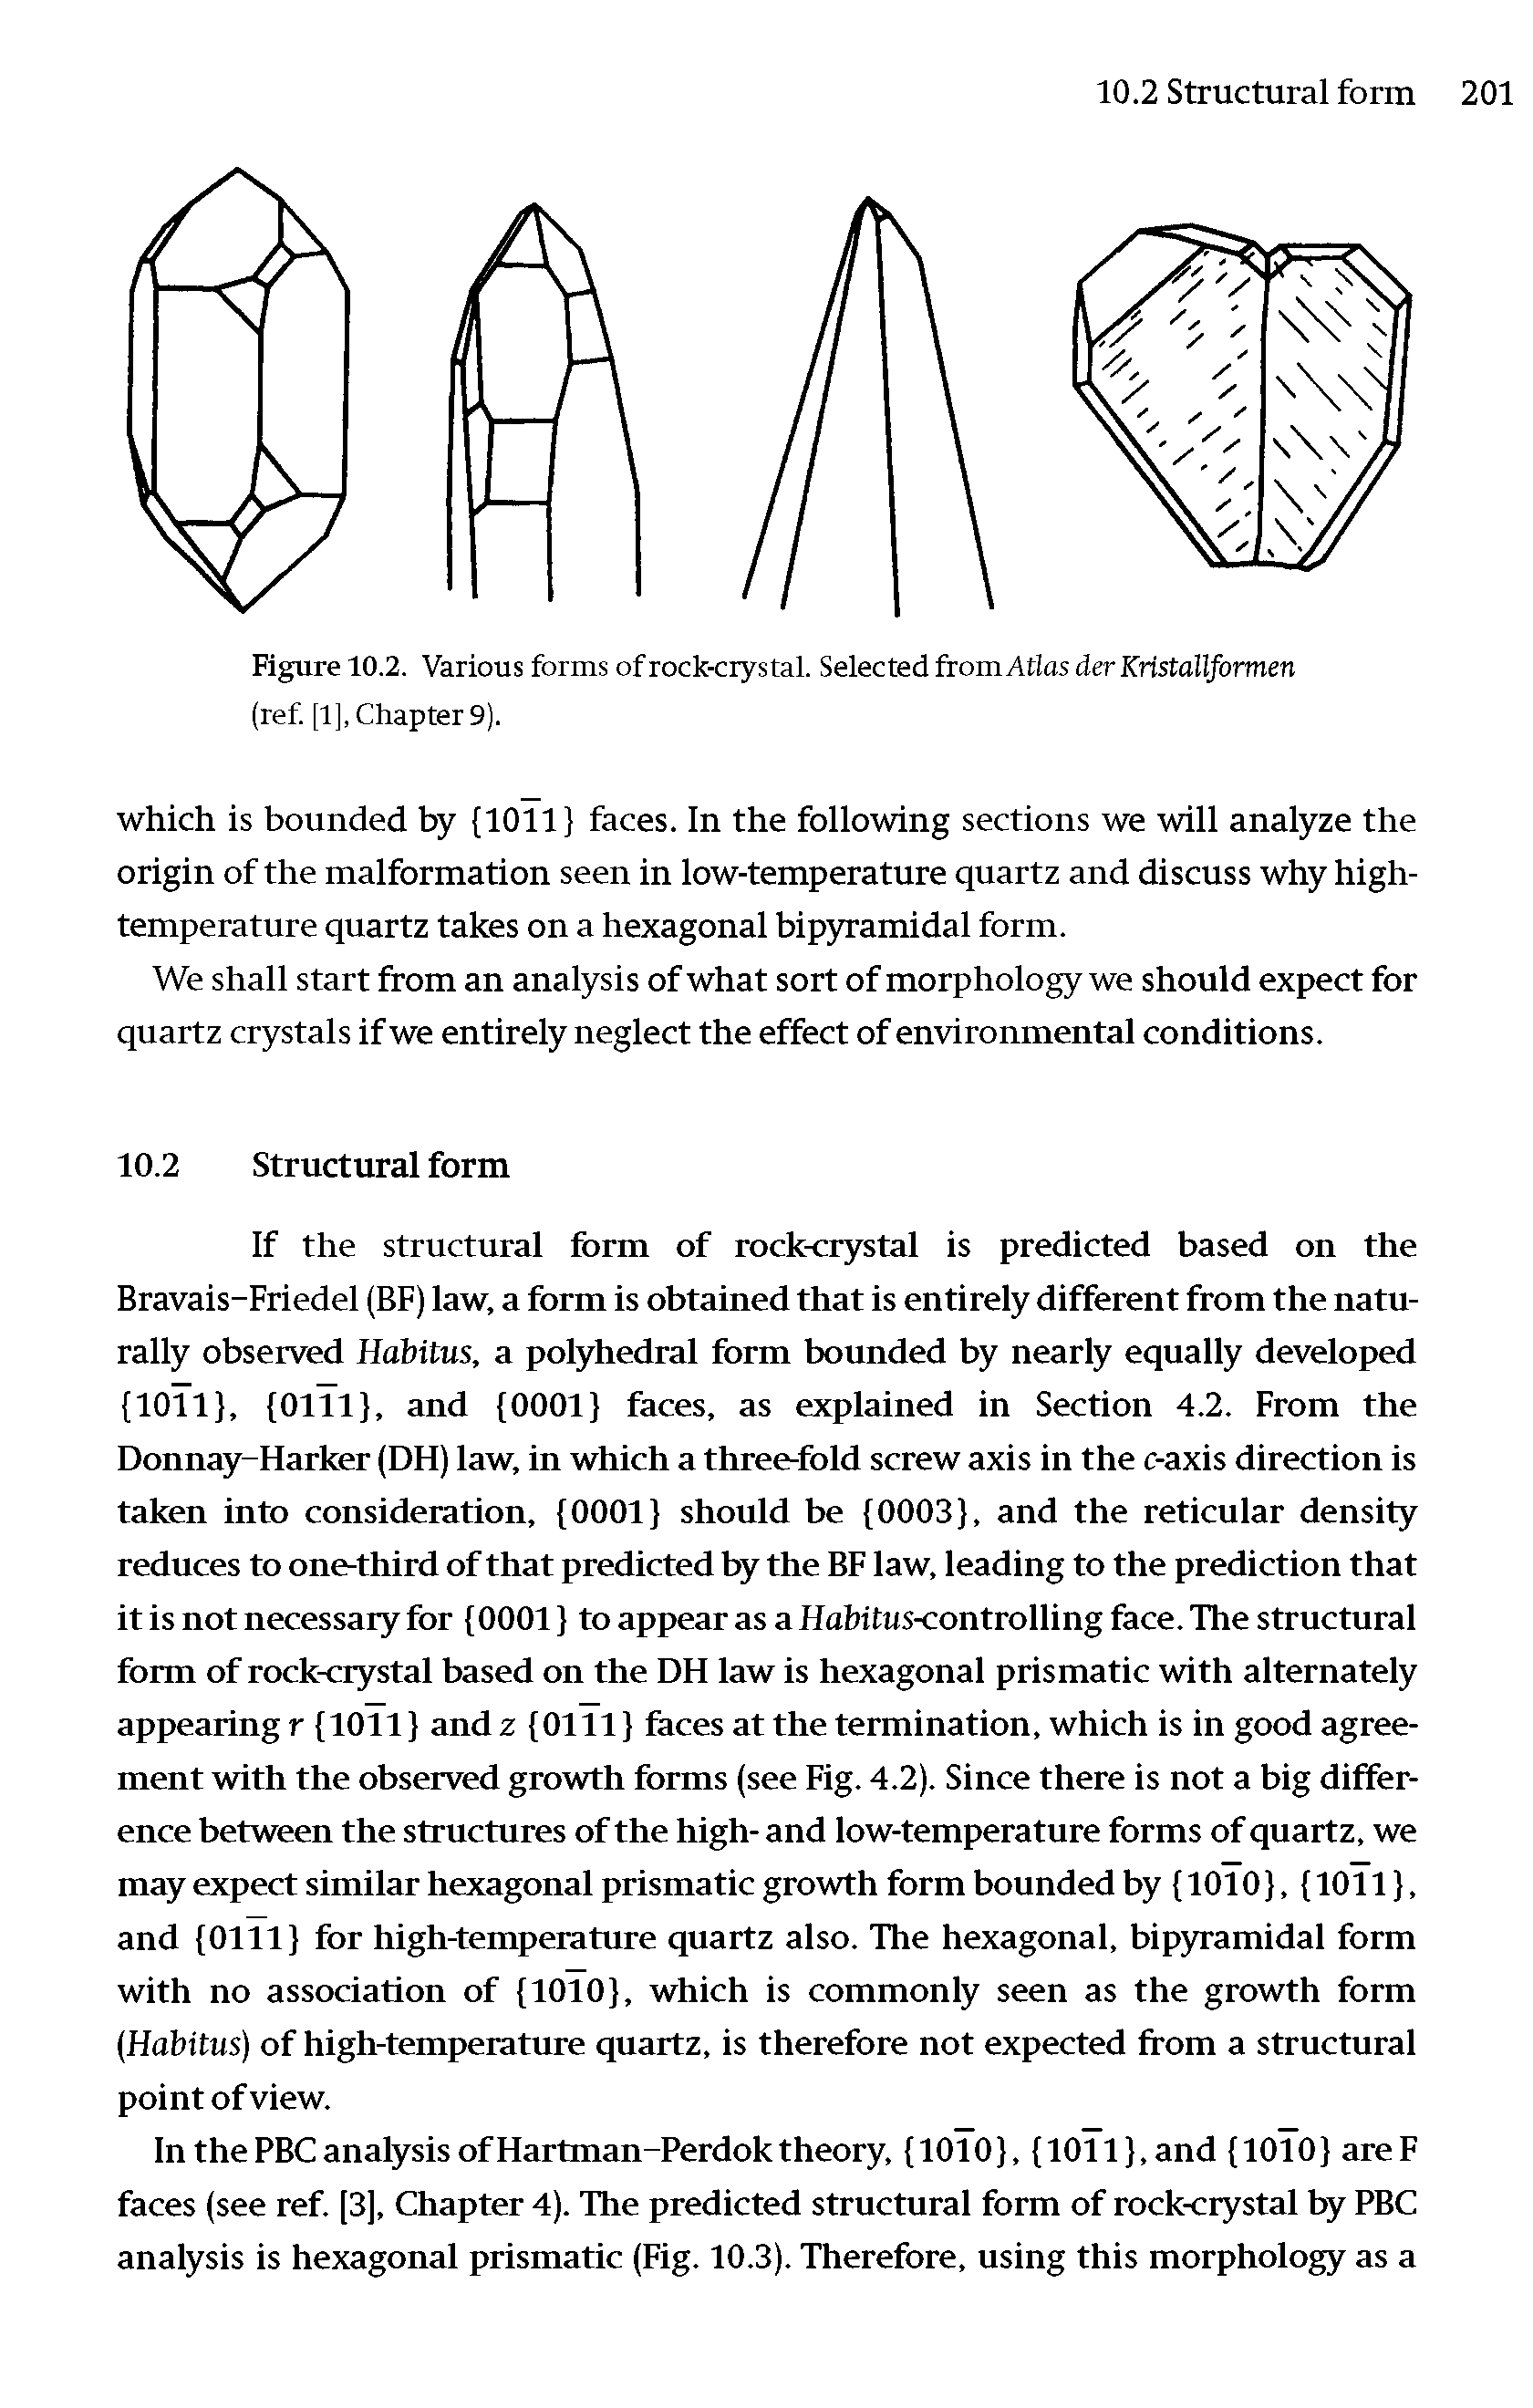 Figure 10.2. Various forms of rock-crystal. Selected from Atlas der Kristallformen (ref. [1], Chapter 9).